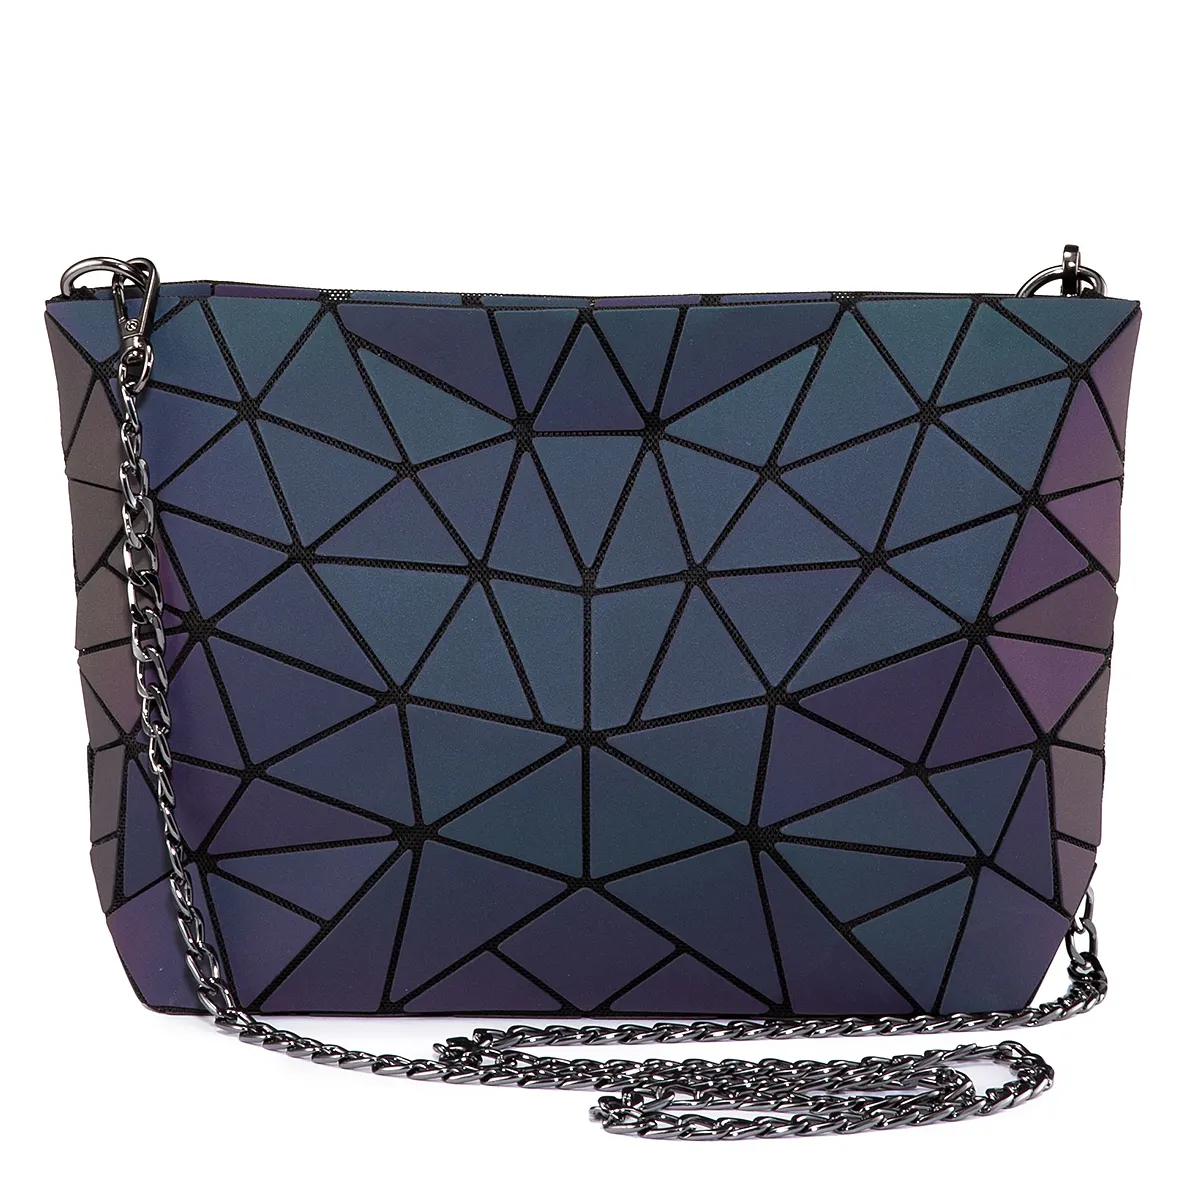 Lovevook 2021hot Selling Geometrische Vierkante Crossbody Bag Lady Taille Tas Merk Mode Meisjes Lichtgevende Reflectie Tas Vrouwen